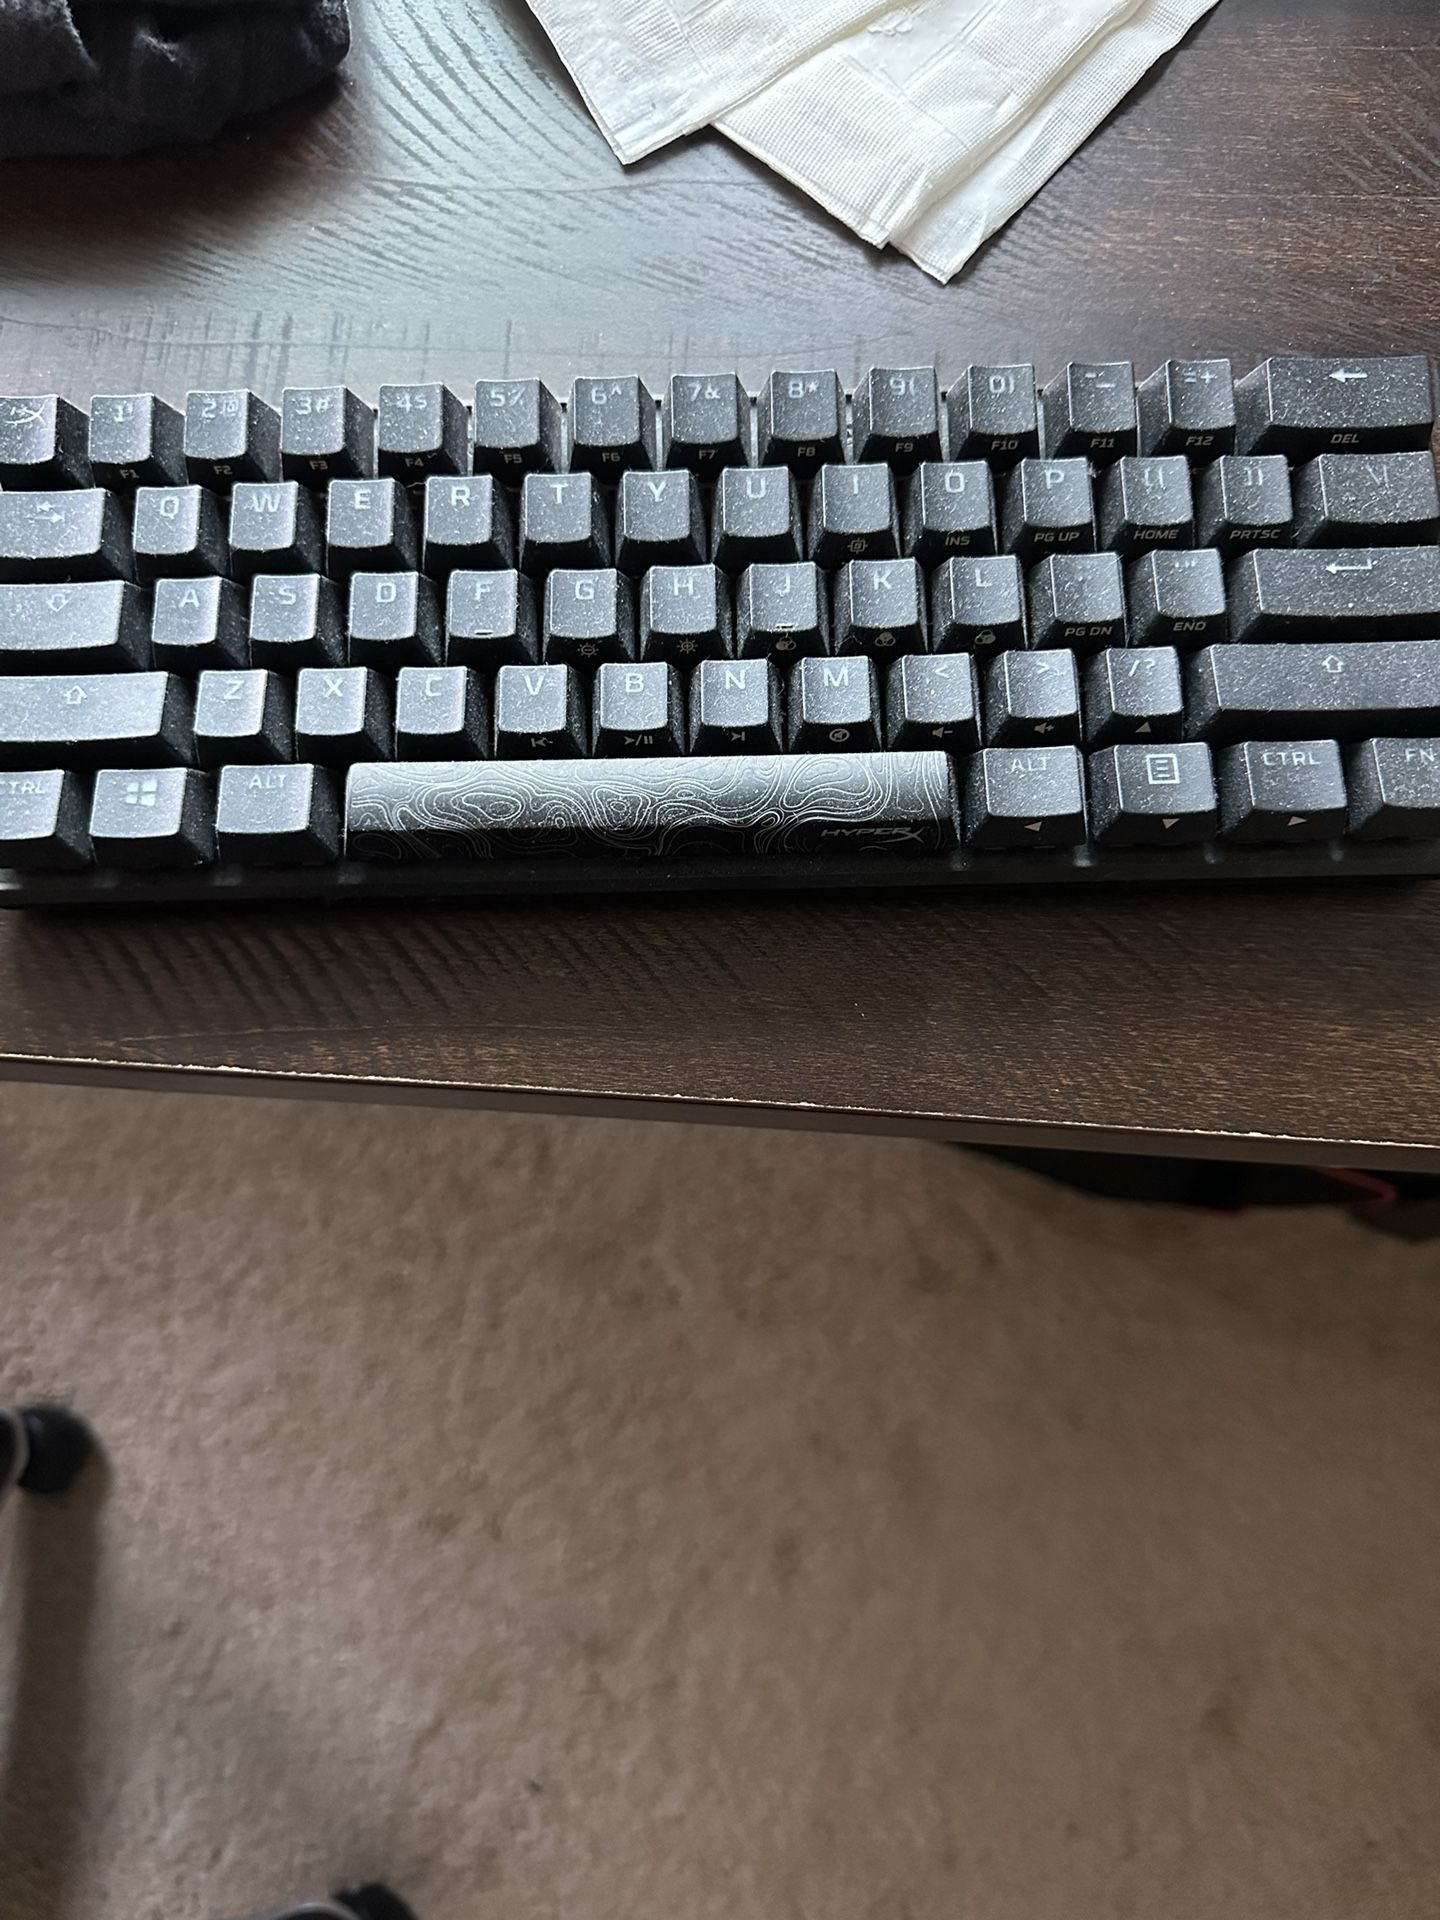 Hyperx Keyboard